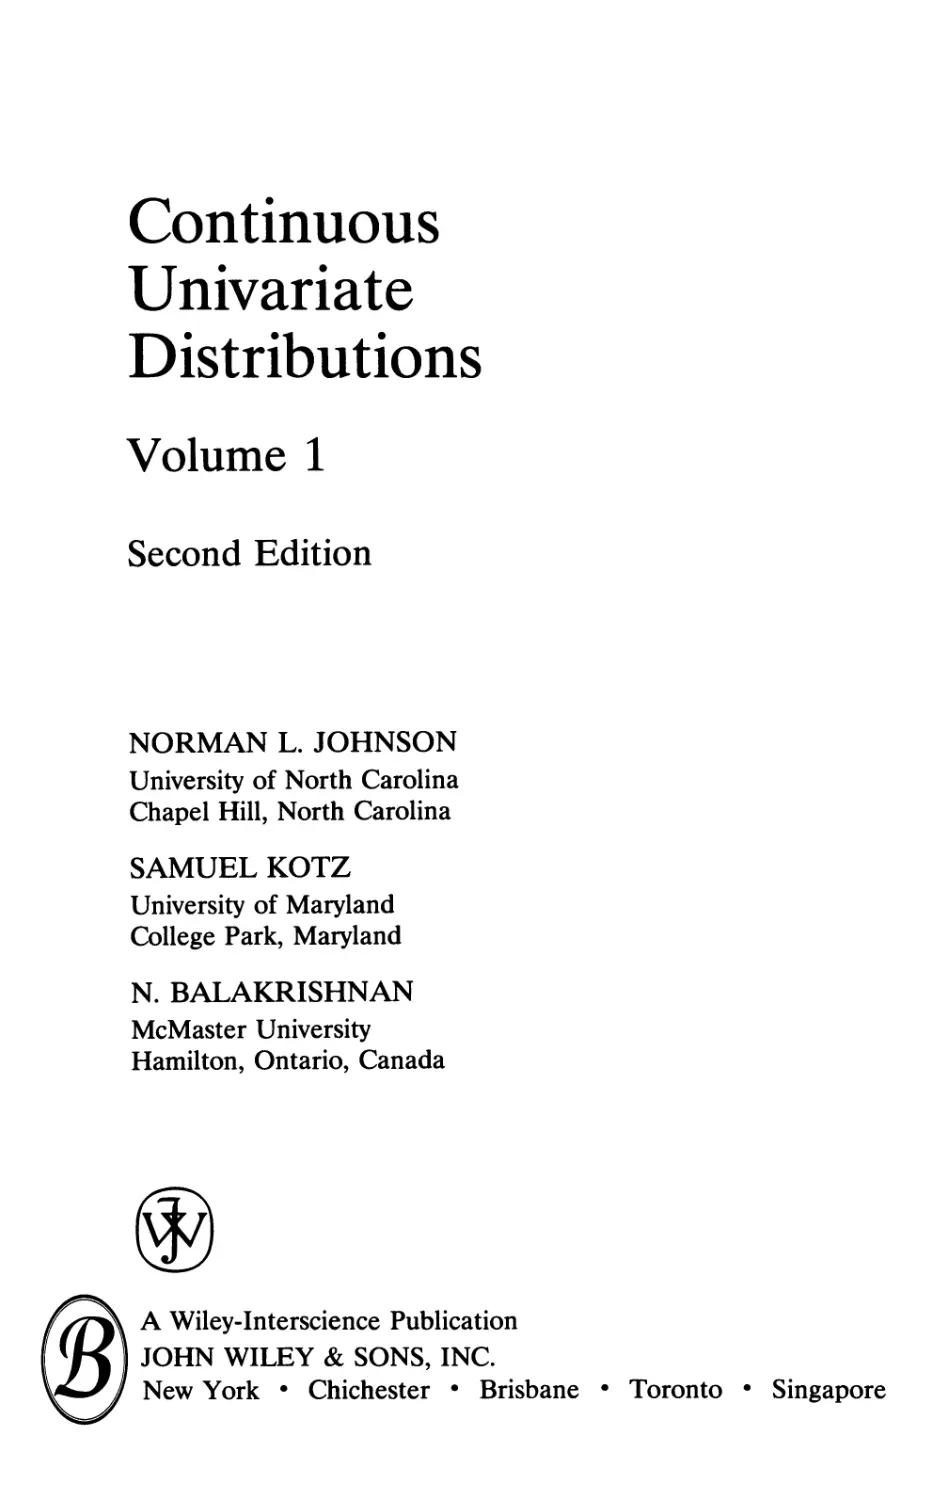 Norman L.J.,Kotz S.,,Balakrishnan N. Continuous univariate distributions, vol. 1